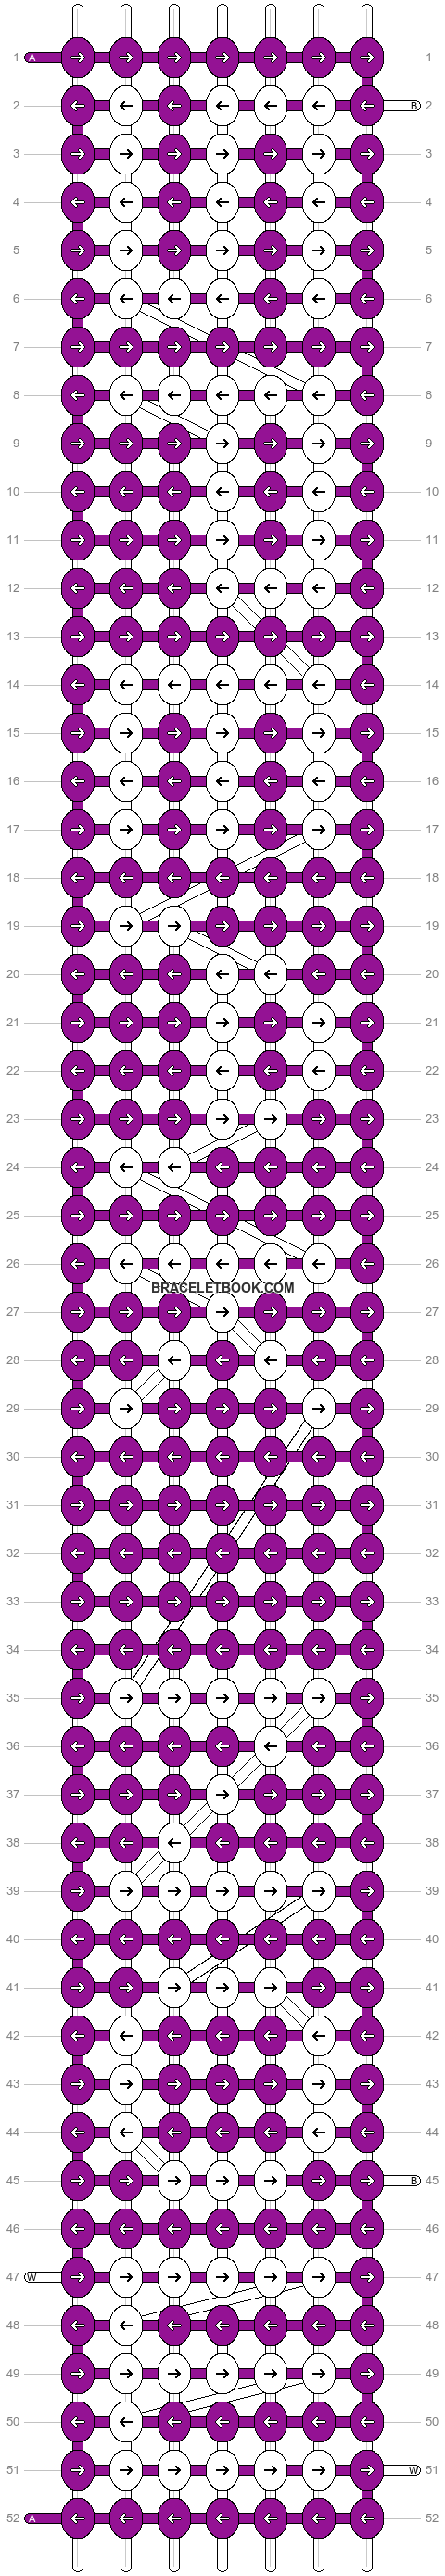 Alpha pattern #6155 pattern